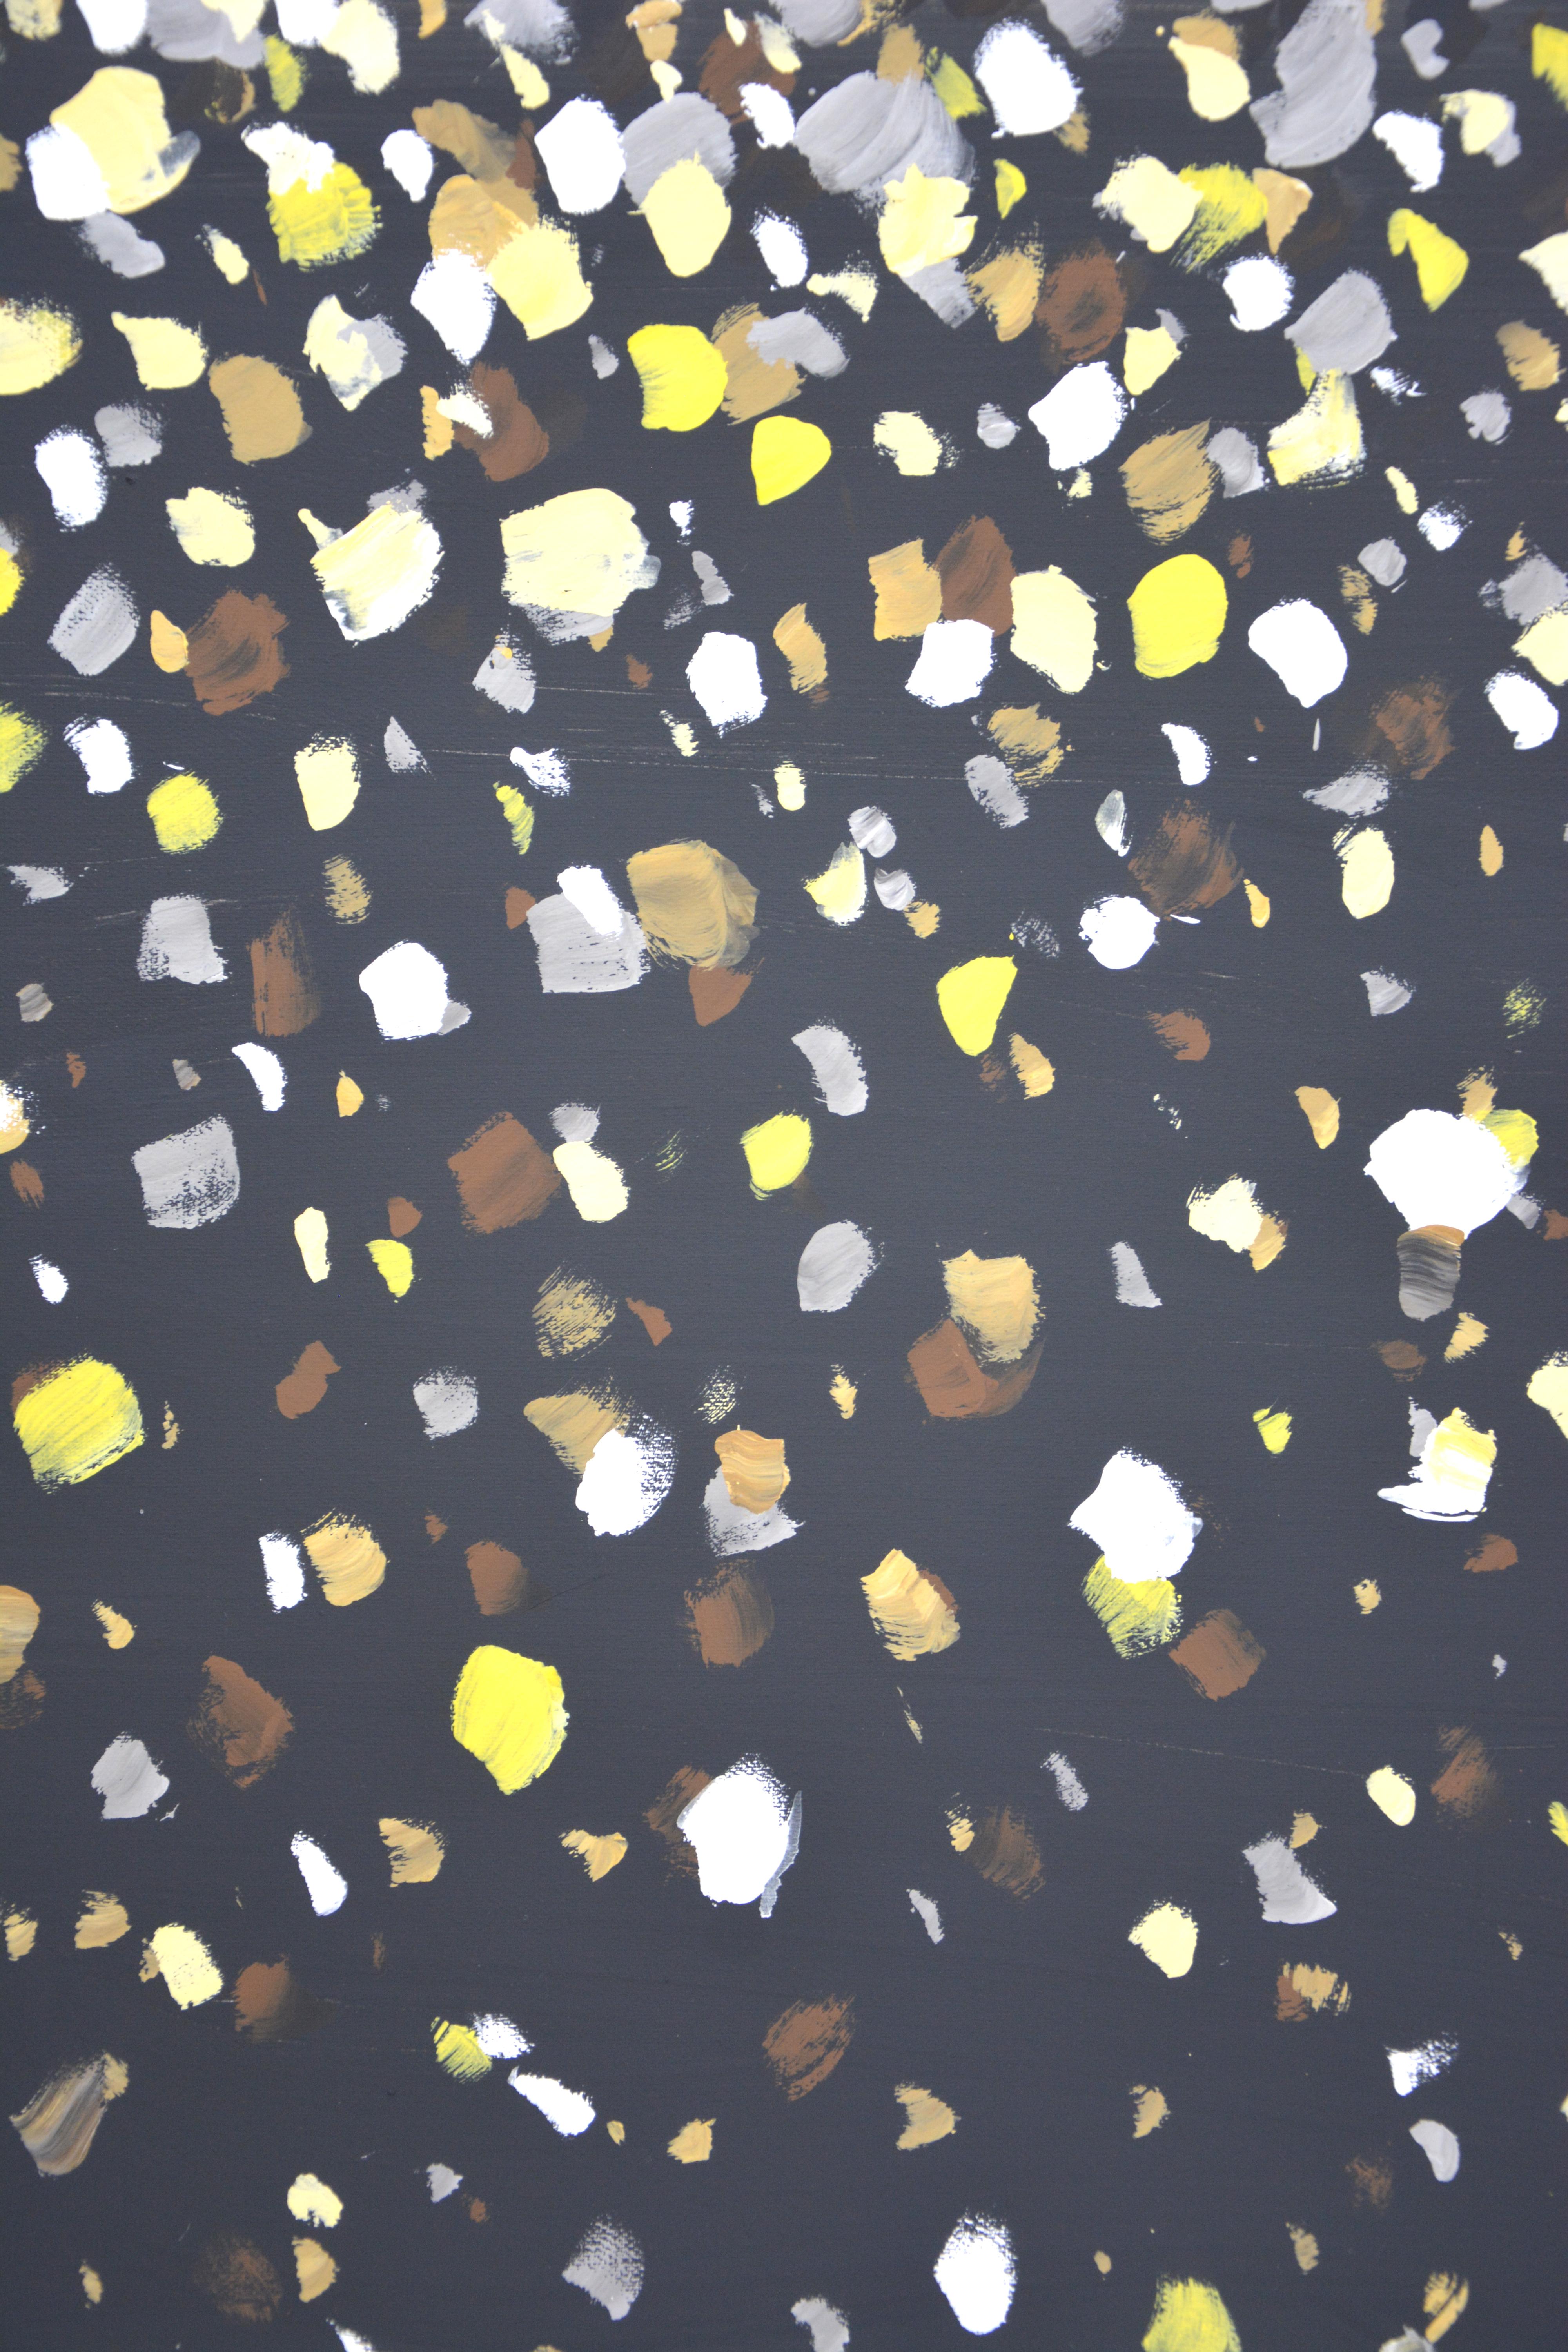 Poantillism. Glare. Interior Painting Modern Design with Black Gold Yellow Dots 4